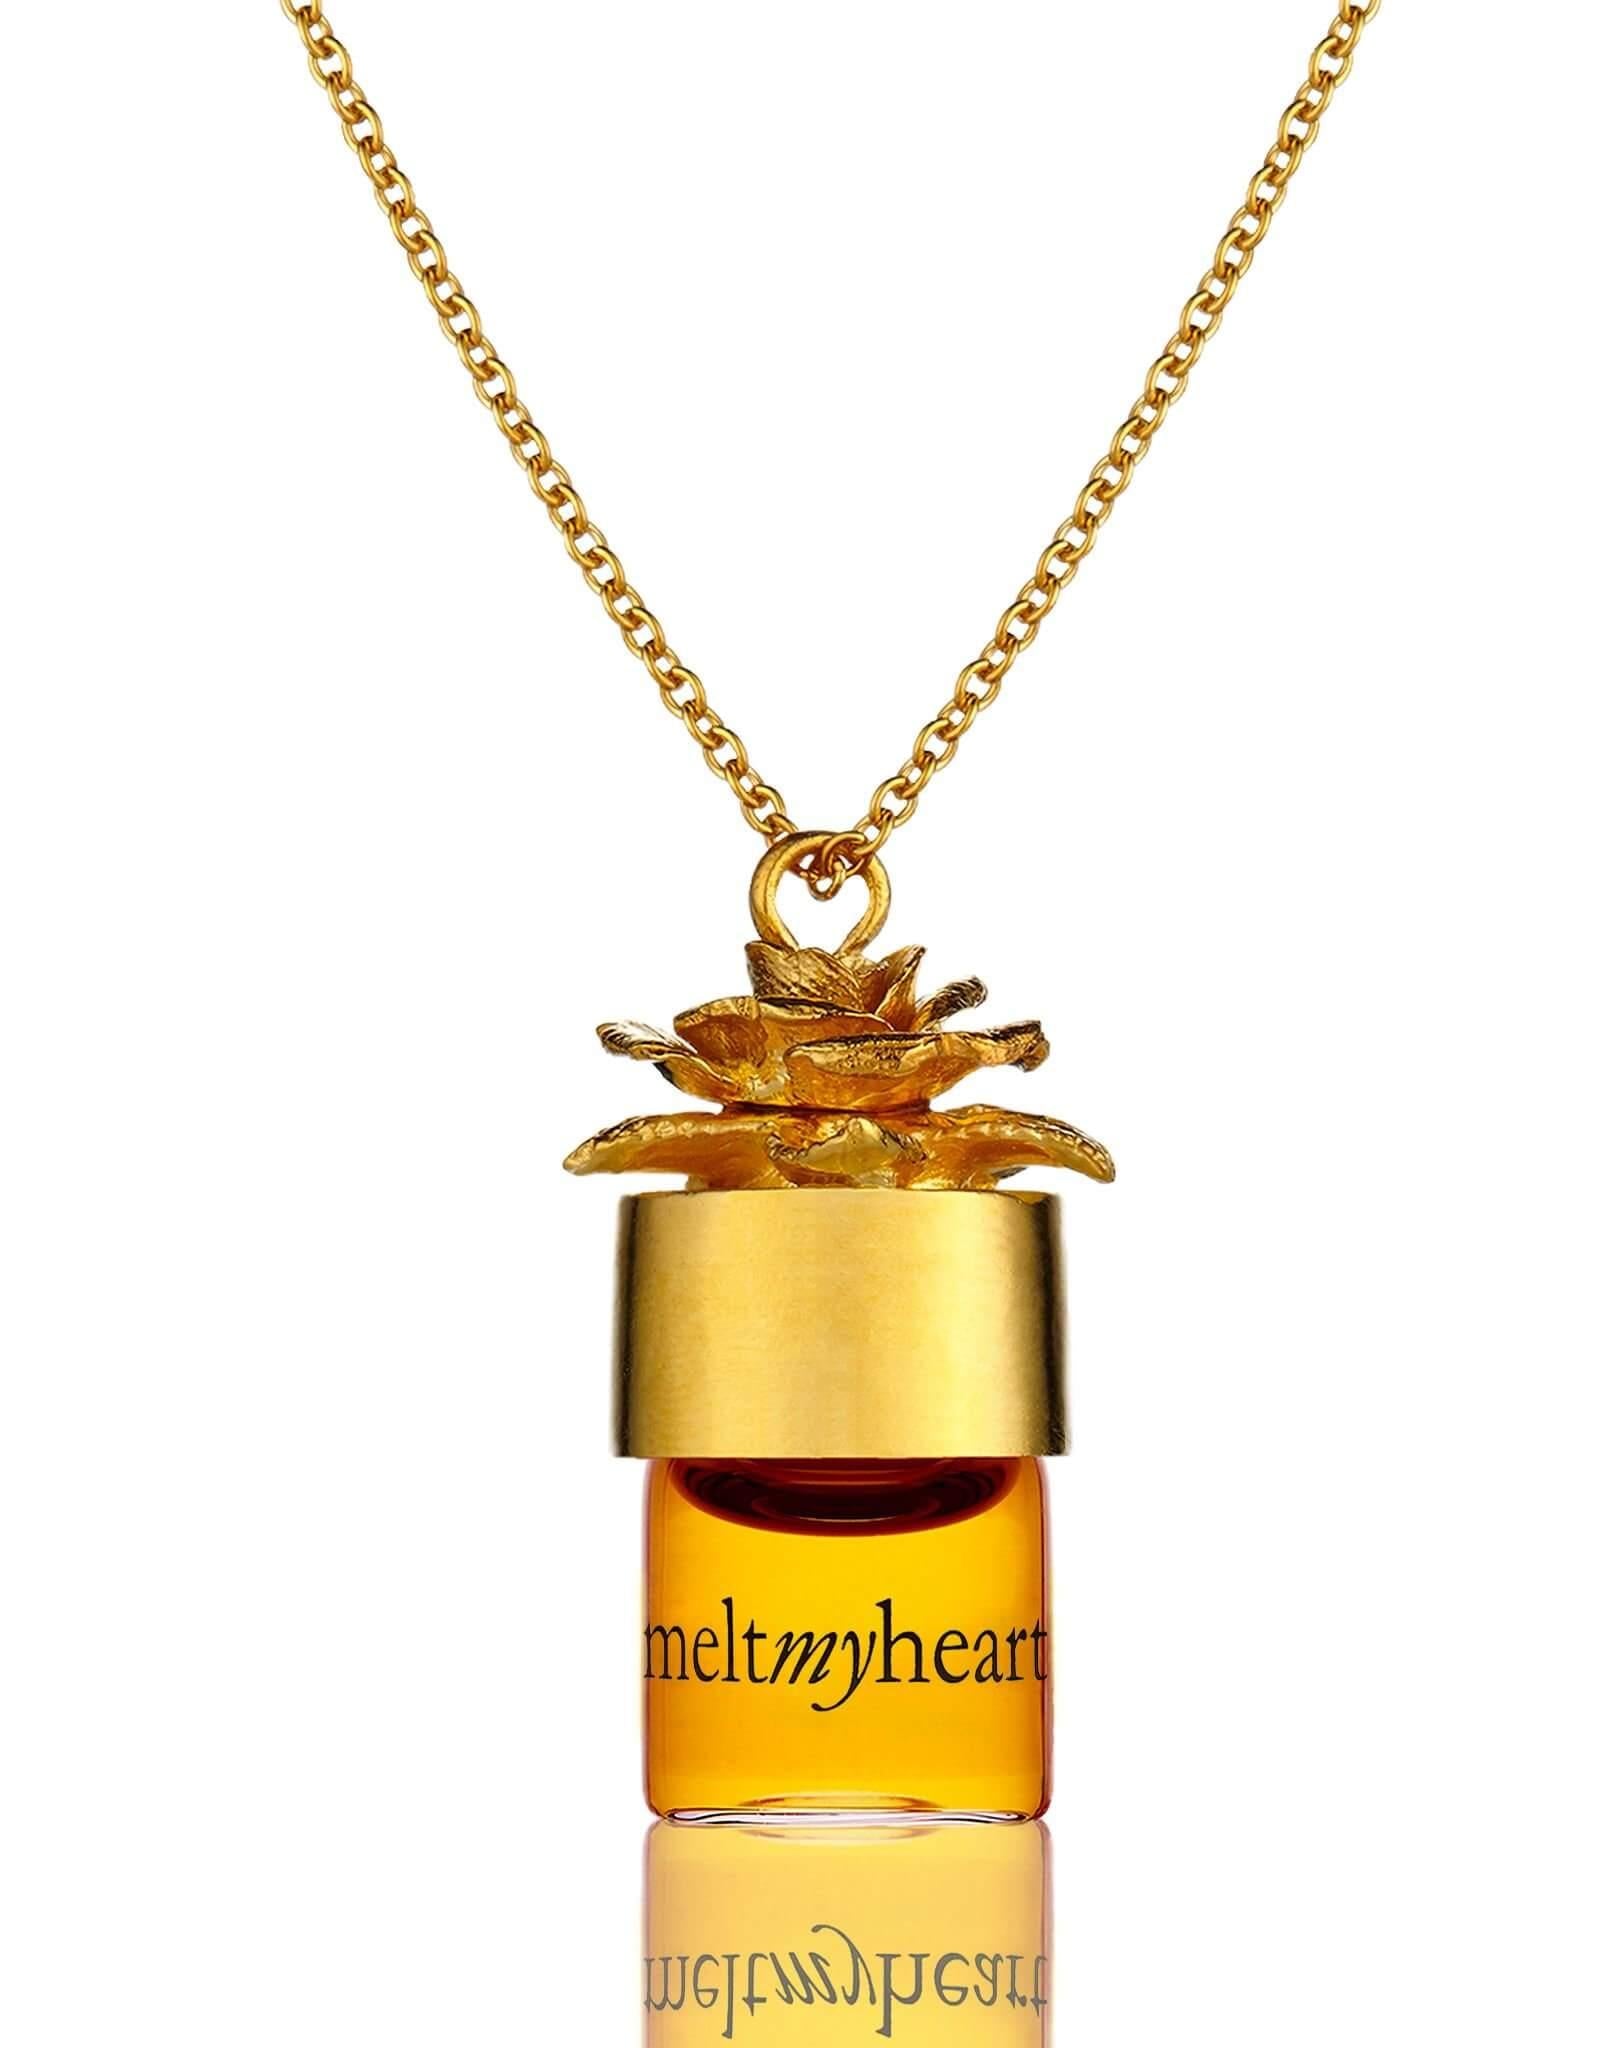 meltmyheart oil necklace by strangelove at Indigo Perfumery